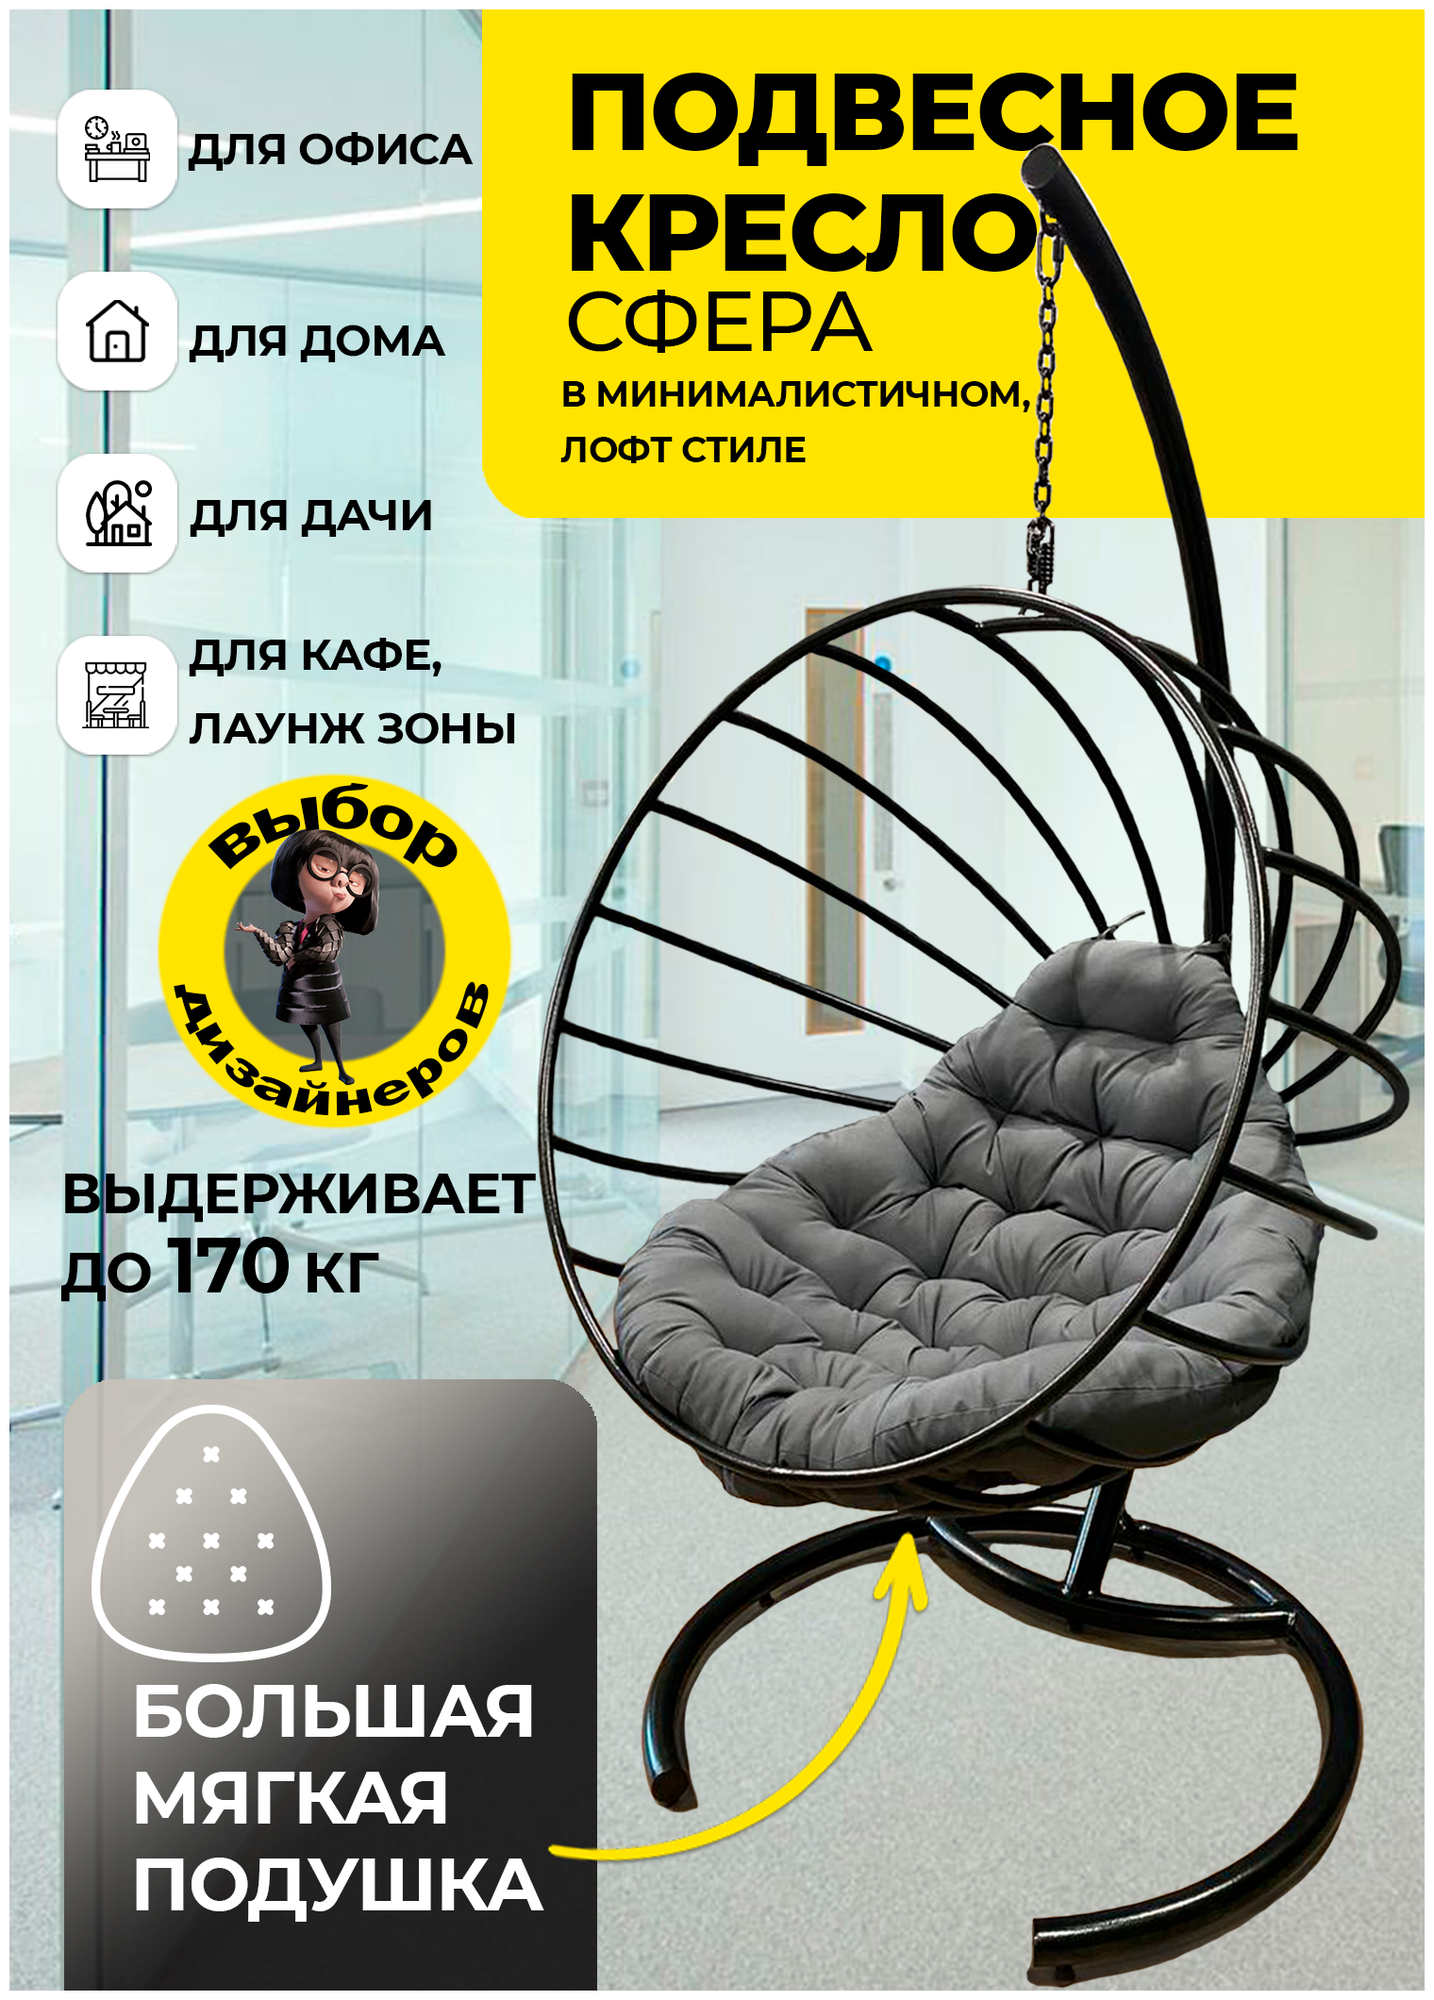 Подвесное кресло Pletenev "Сфера"